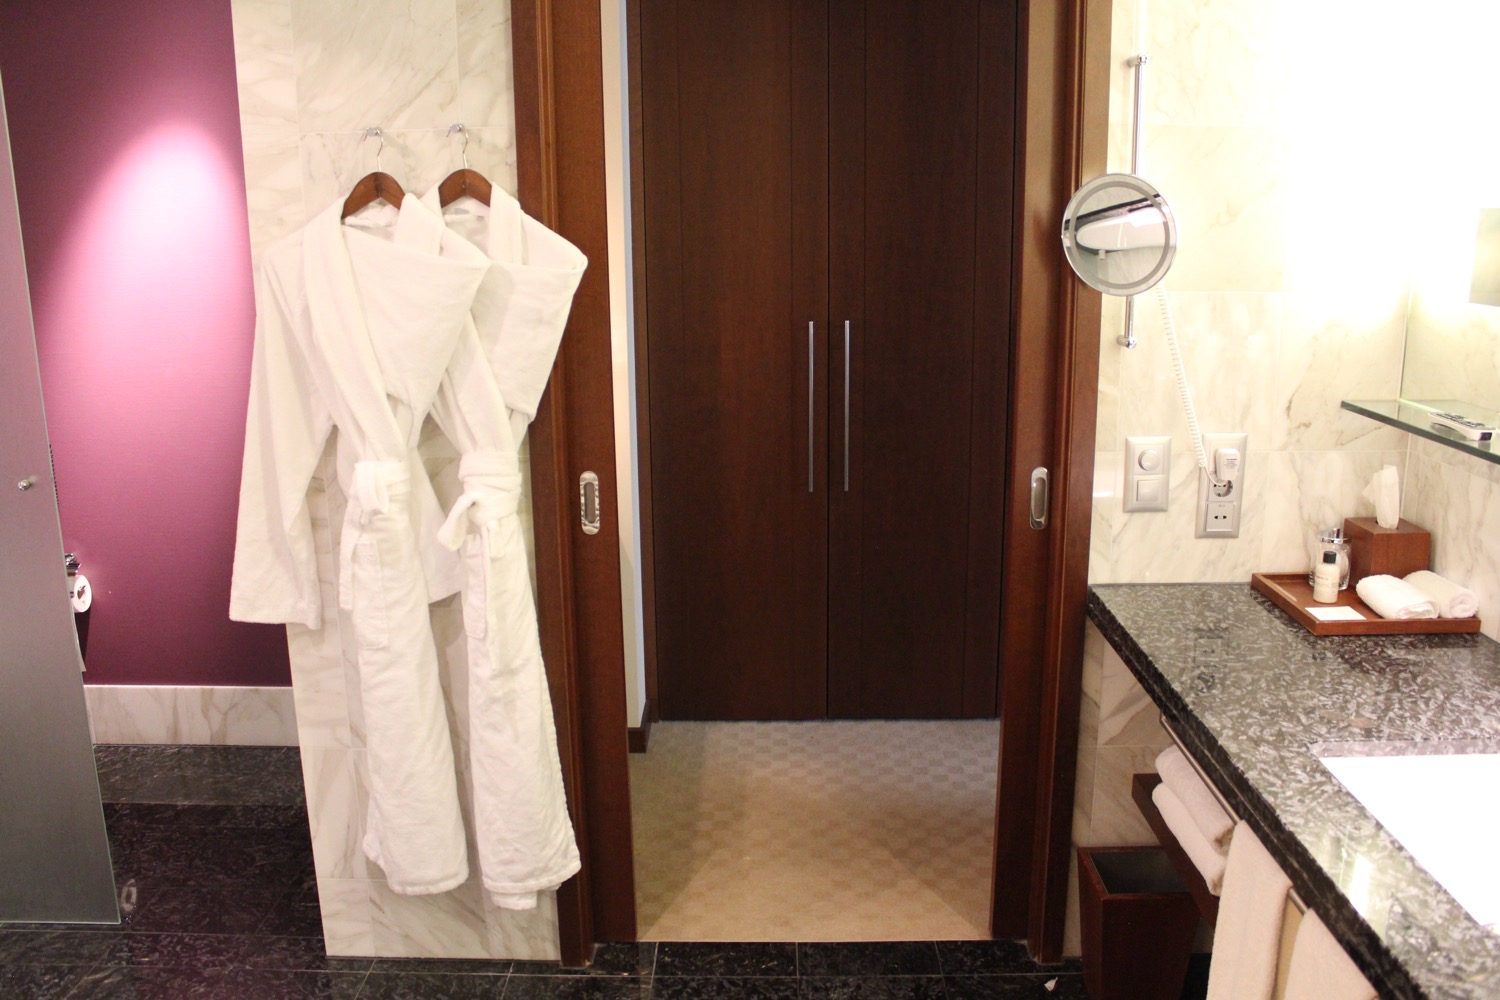 a bathroom with white bathrobes and a mirror